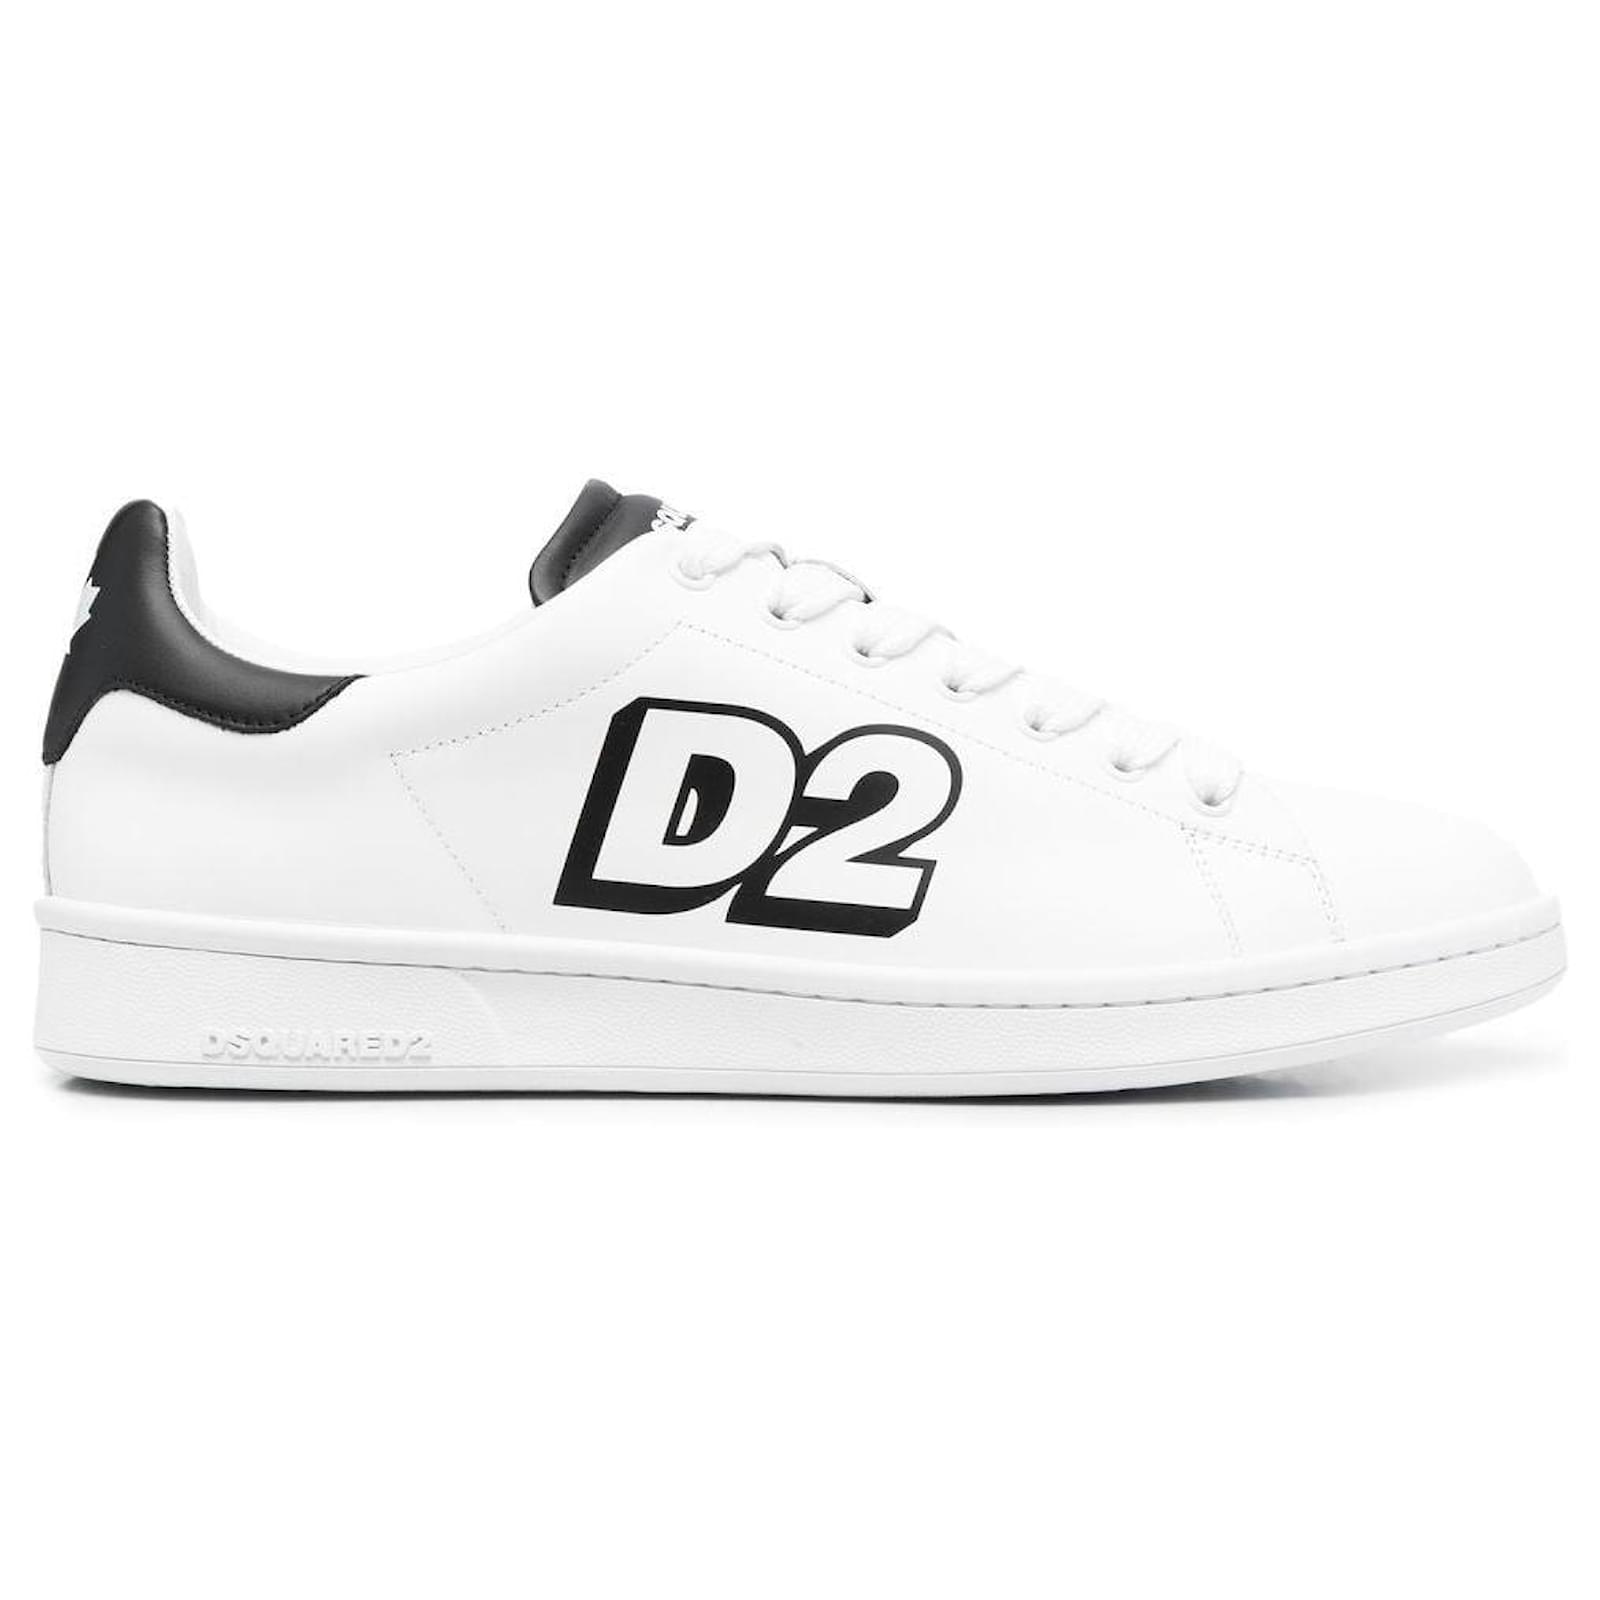 DSQUARED2 Sneakers LEGENDARY in black/ white